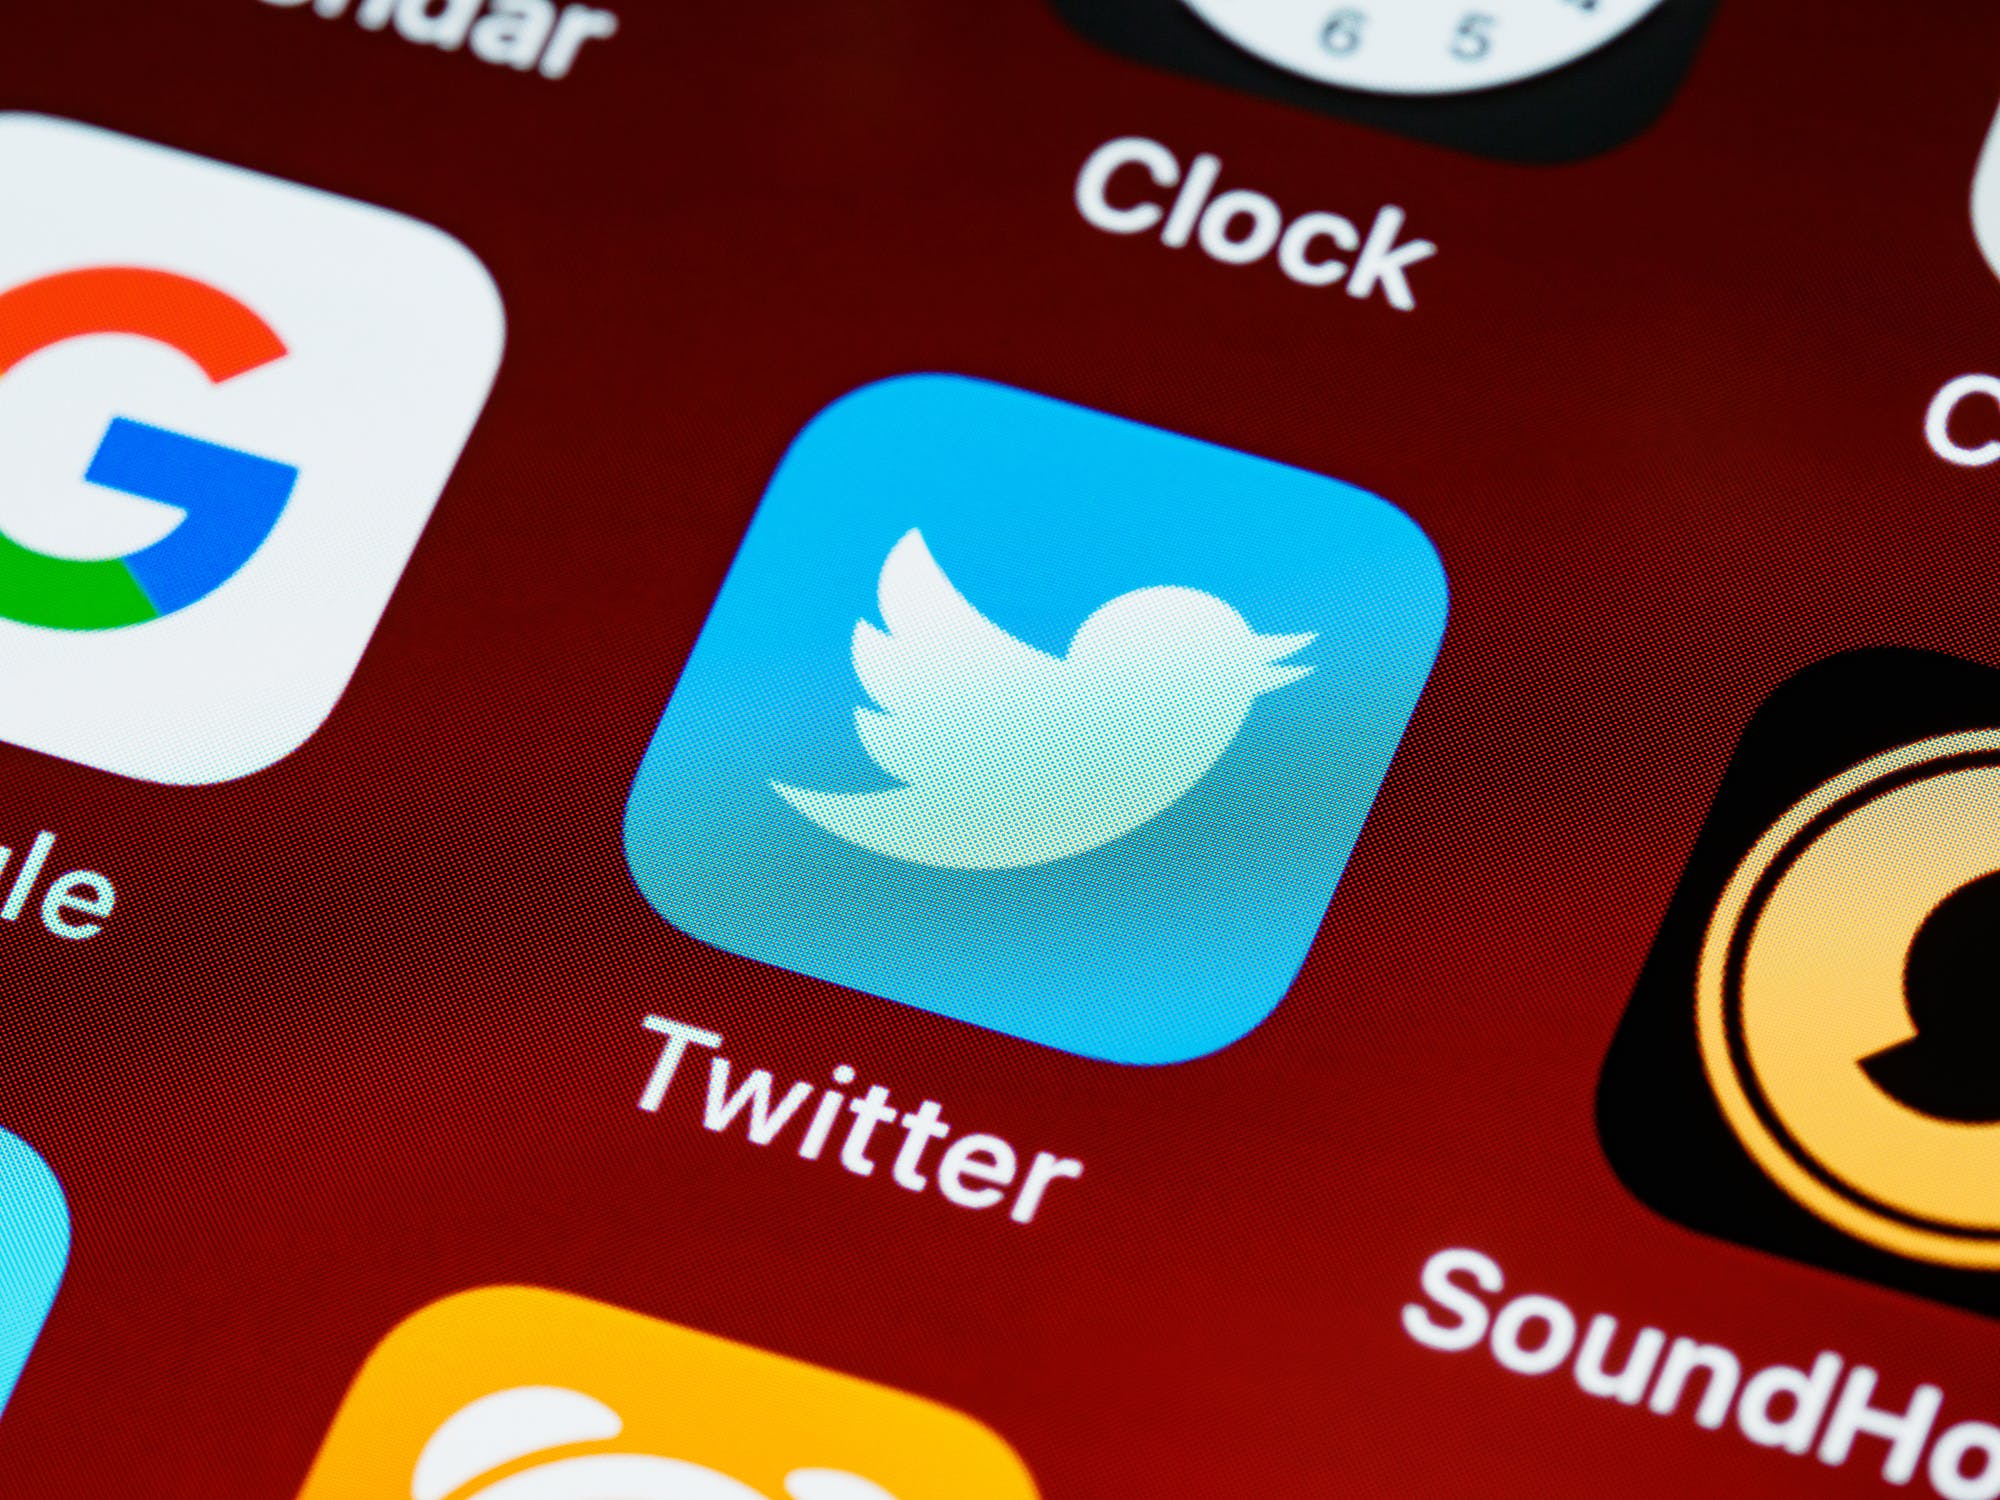 Twitter develops new feature called Flocks